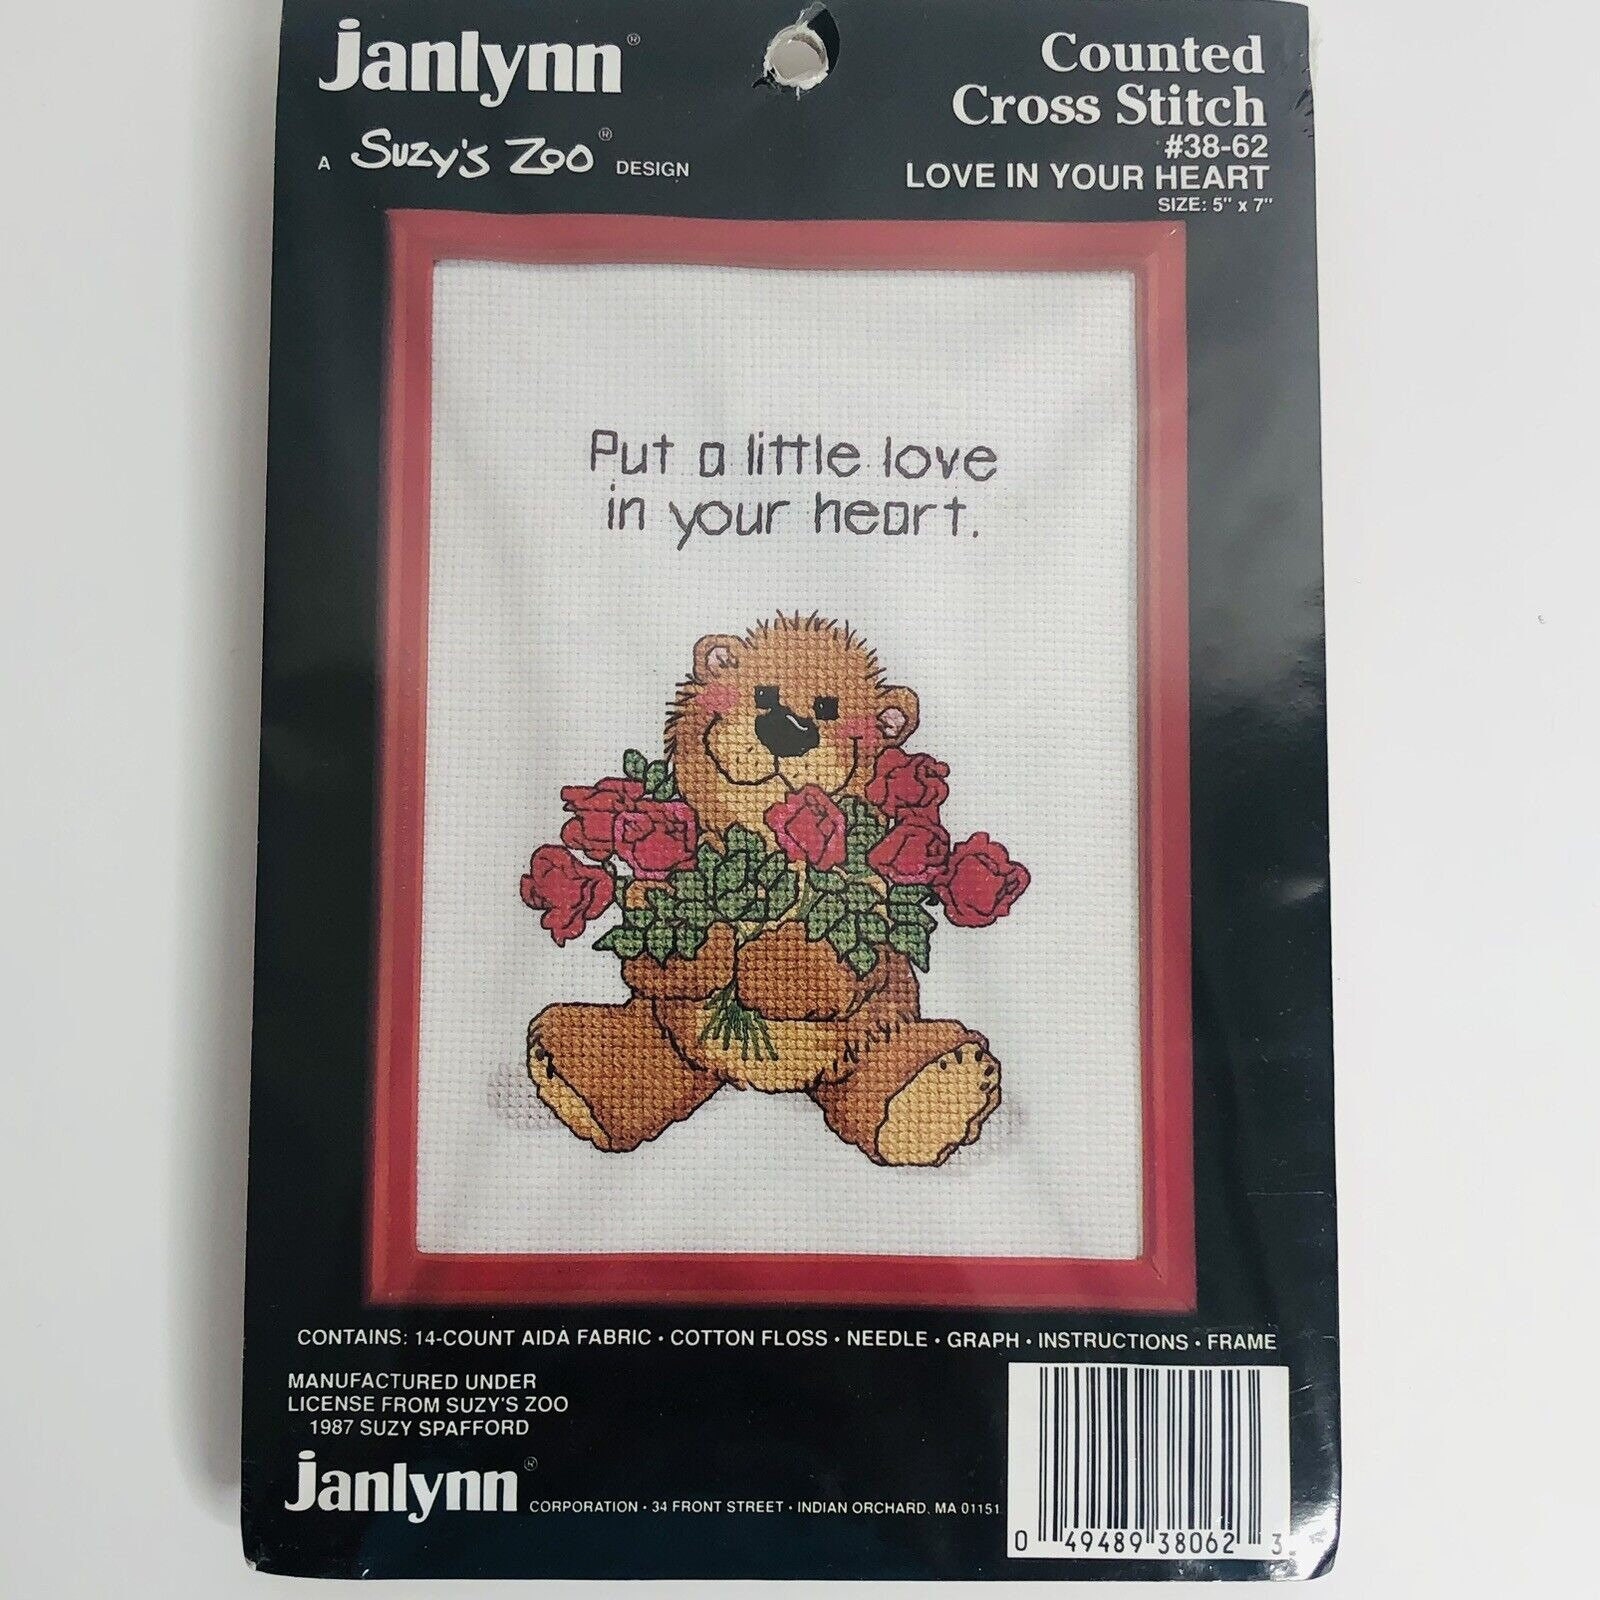 Love Is Patient, STAMPED cross stitch kit (Janlynn)